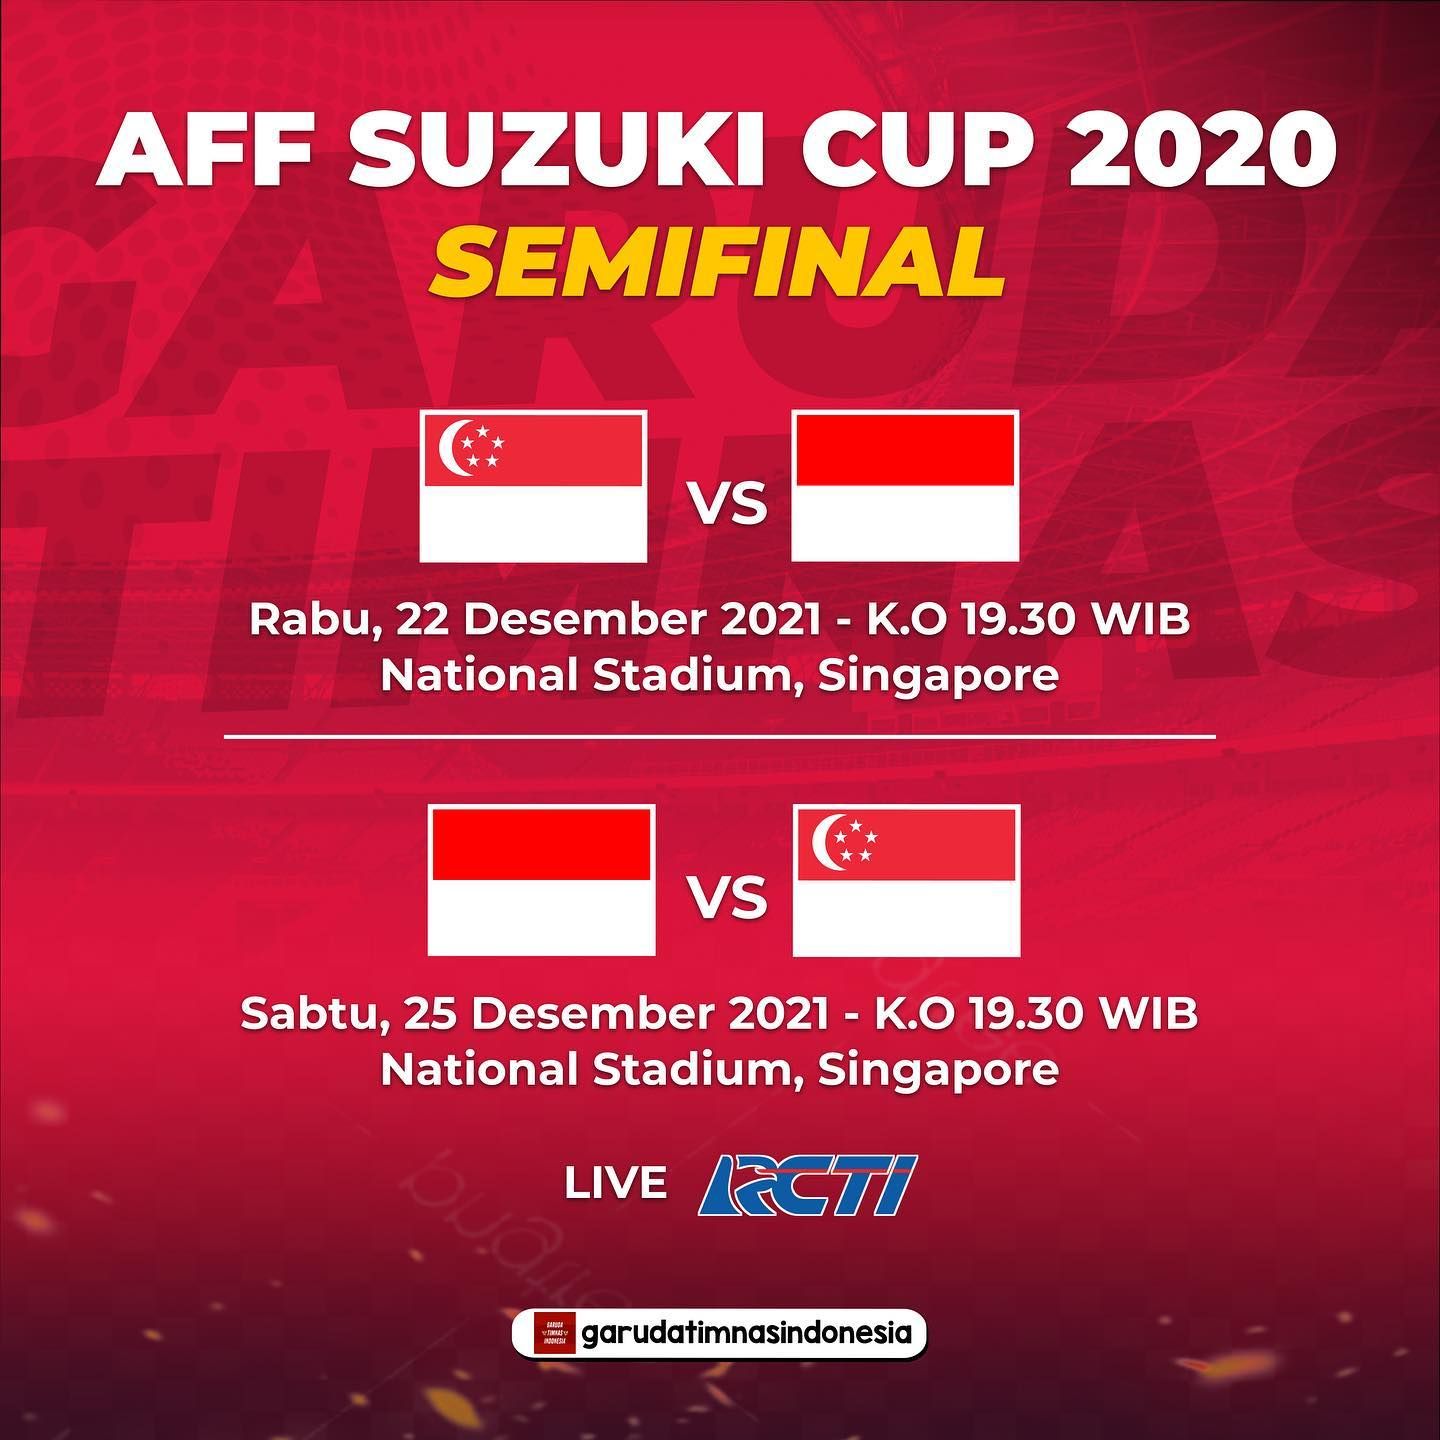 Semifinal indonesia vs singapura